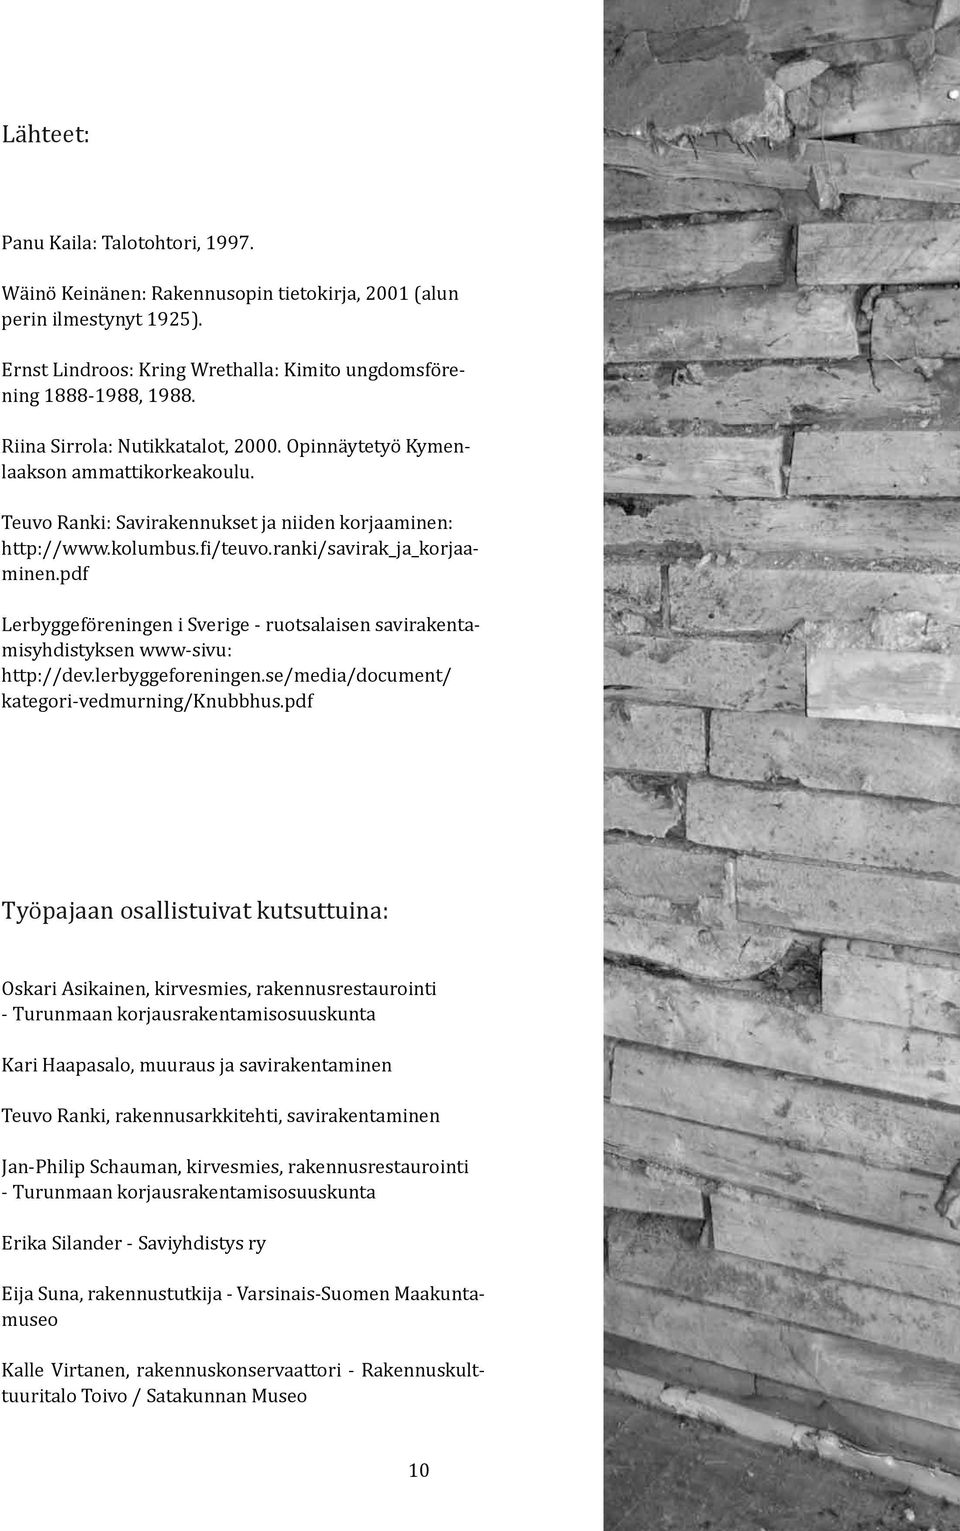 pdf Lerbyggeföreningen i Sverige - ruotsalaisen savirakentamisyhdistyksen www-sivu: http://dev.lerbyggeforeningen.se/media/document/ kategori-vedmurning/knubbhus.